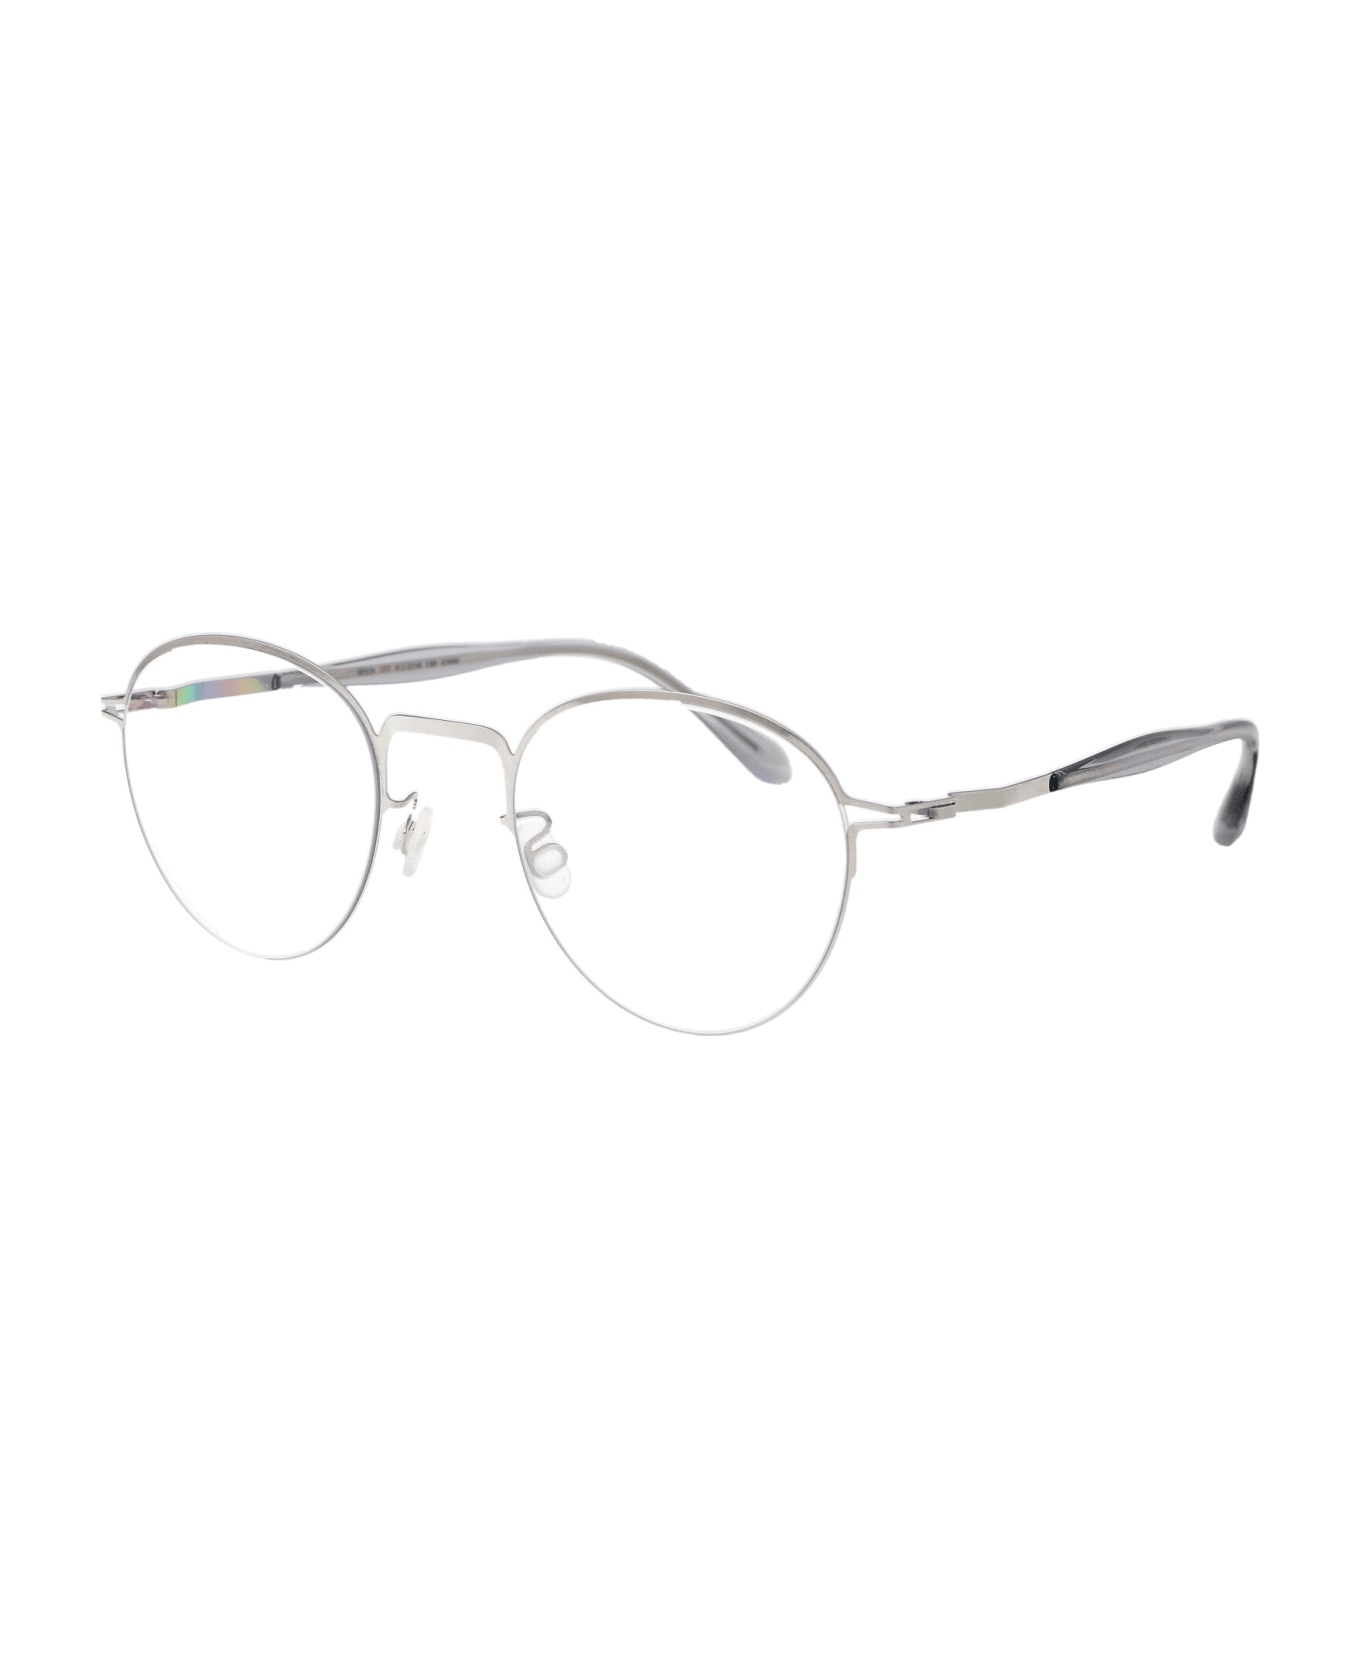 Mykita Tate Glasses - 051 SHINY SILVER CLEAR アイウェア